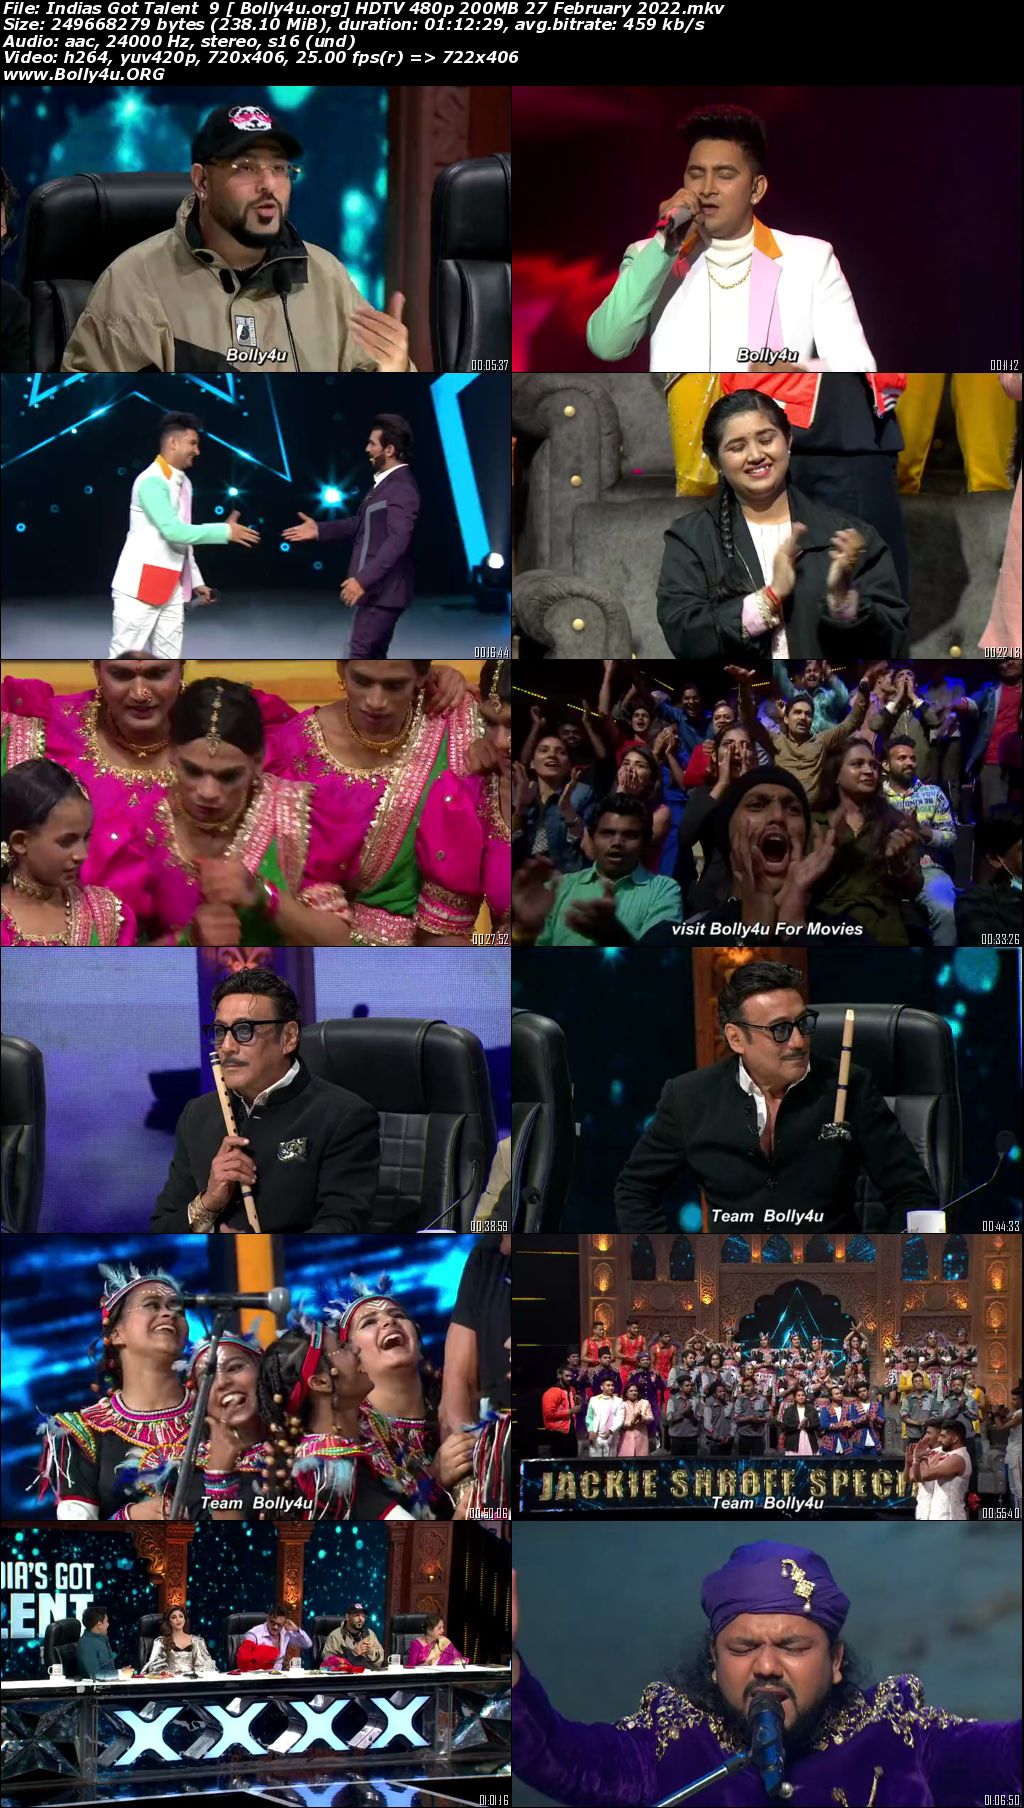 Indias Got Talent 9 HDTV 480p 200MB 27 February 2022 Download